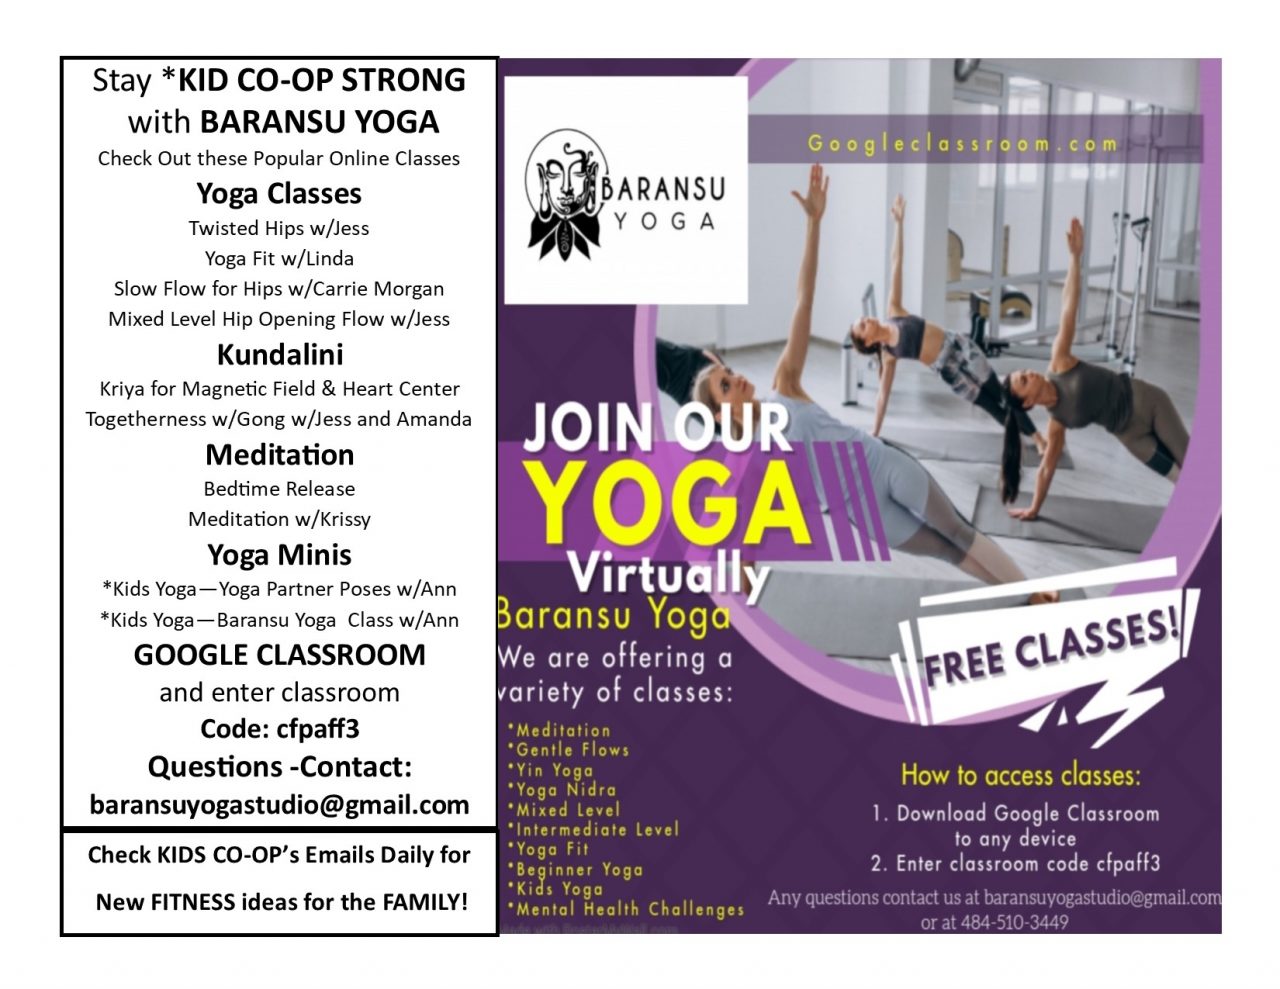 3-31-20-Baransu-Yoga-class-list-and-link-info-1280x989.jpg